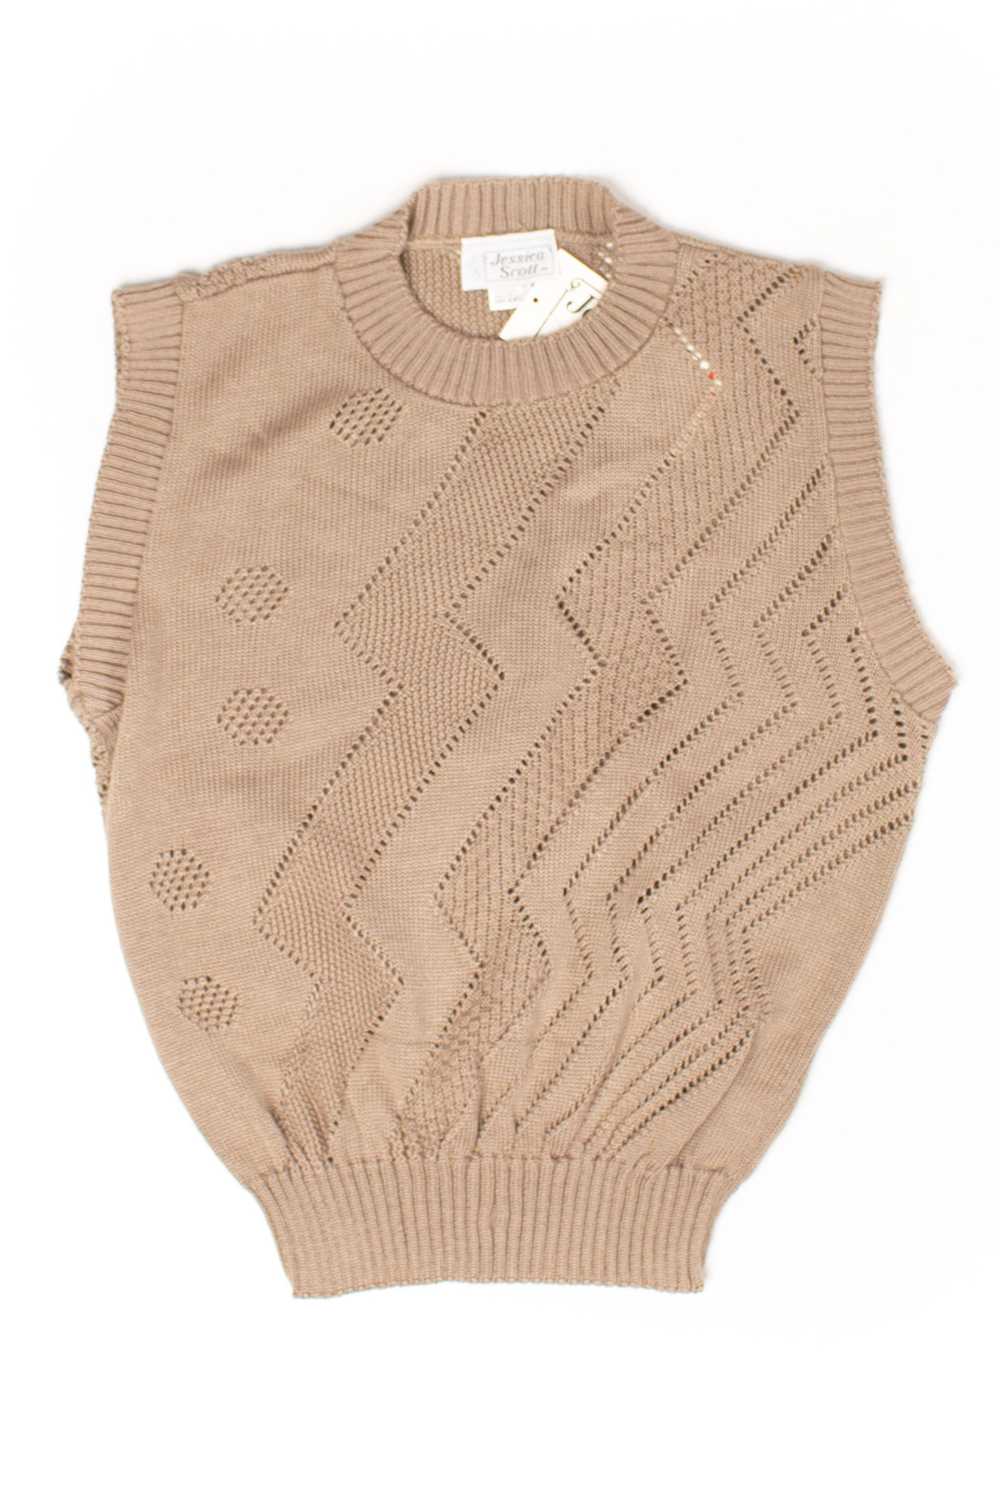 Vintage Tan Mesh Pattern Sweater Vest - image 2